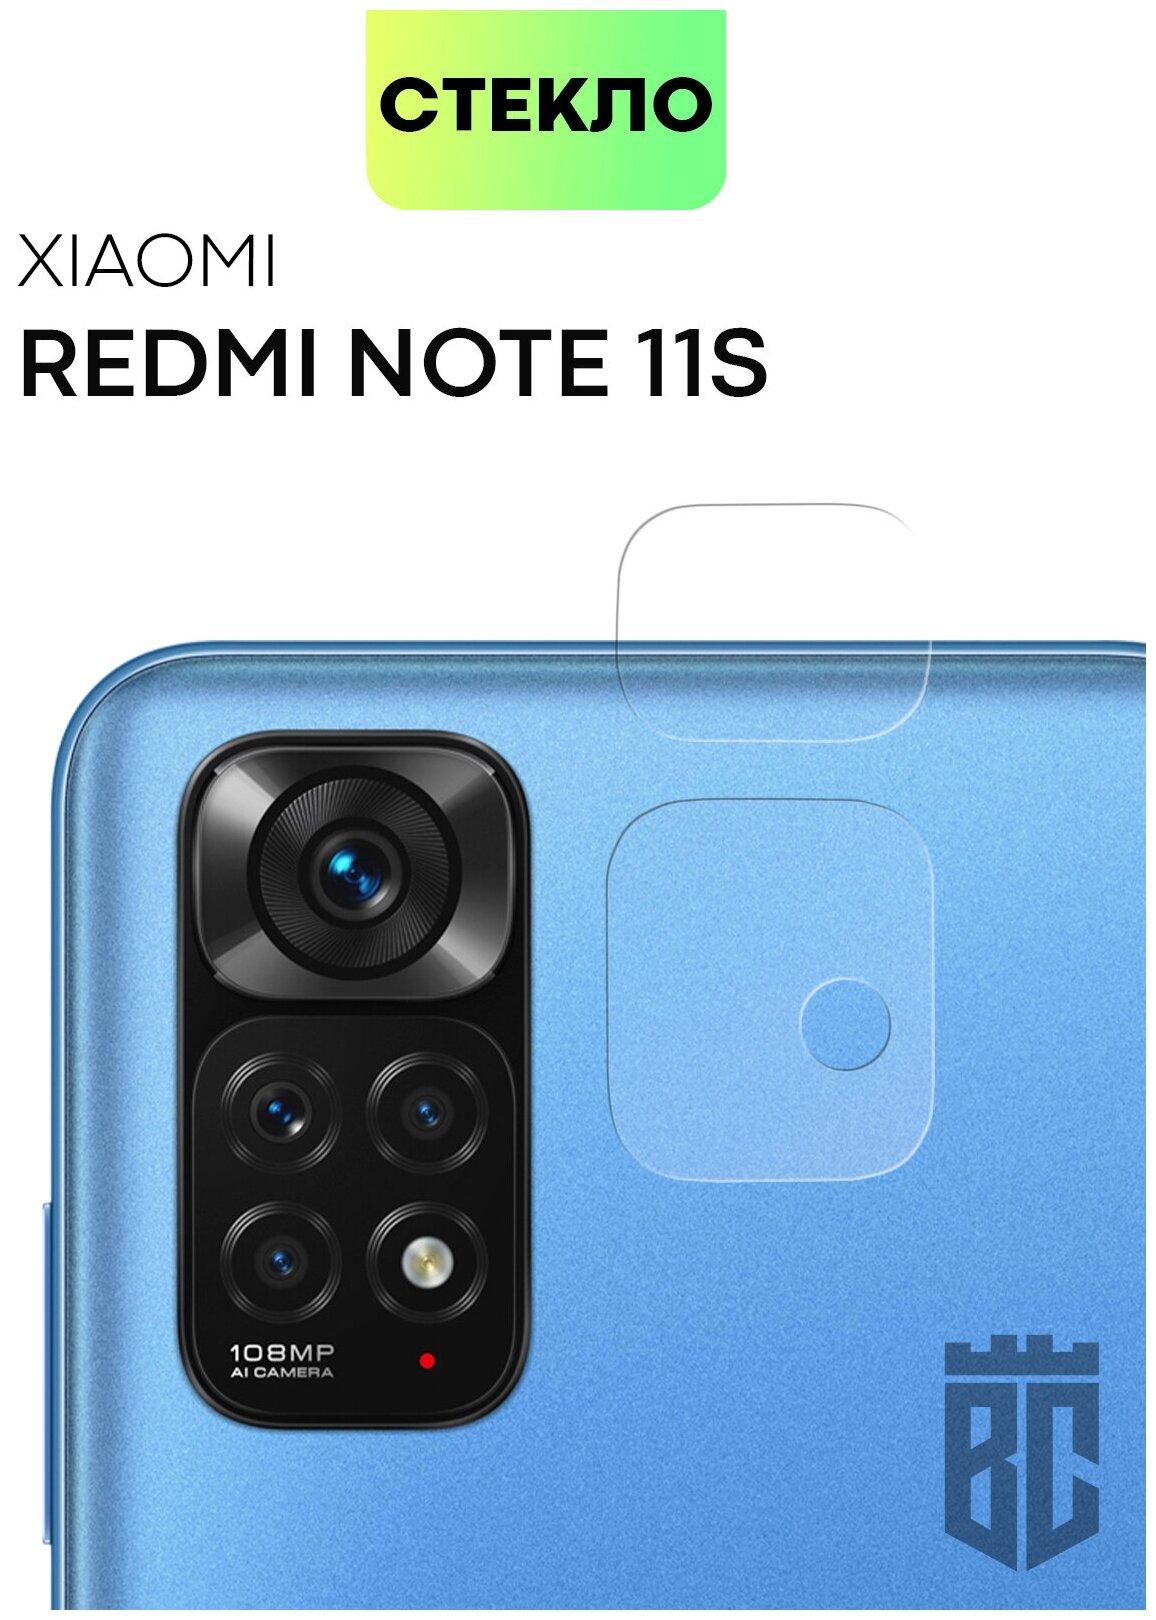 Стекло на камеру телефона Xiaomi Redmi Note 11S (Сяоми Редми Ноут 11С Редми Нот 11 эс) противоударное стекло BROSCORP для камер смартфона прозрачное